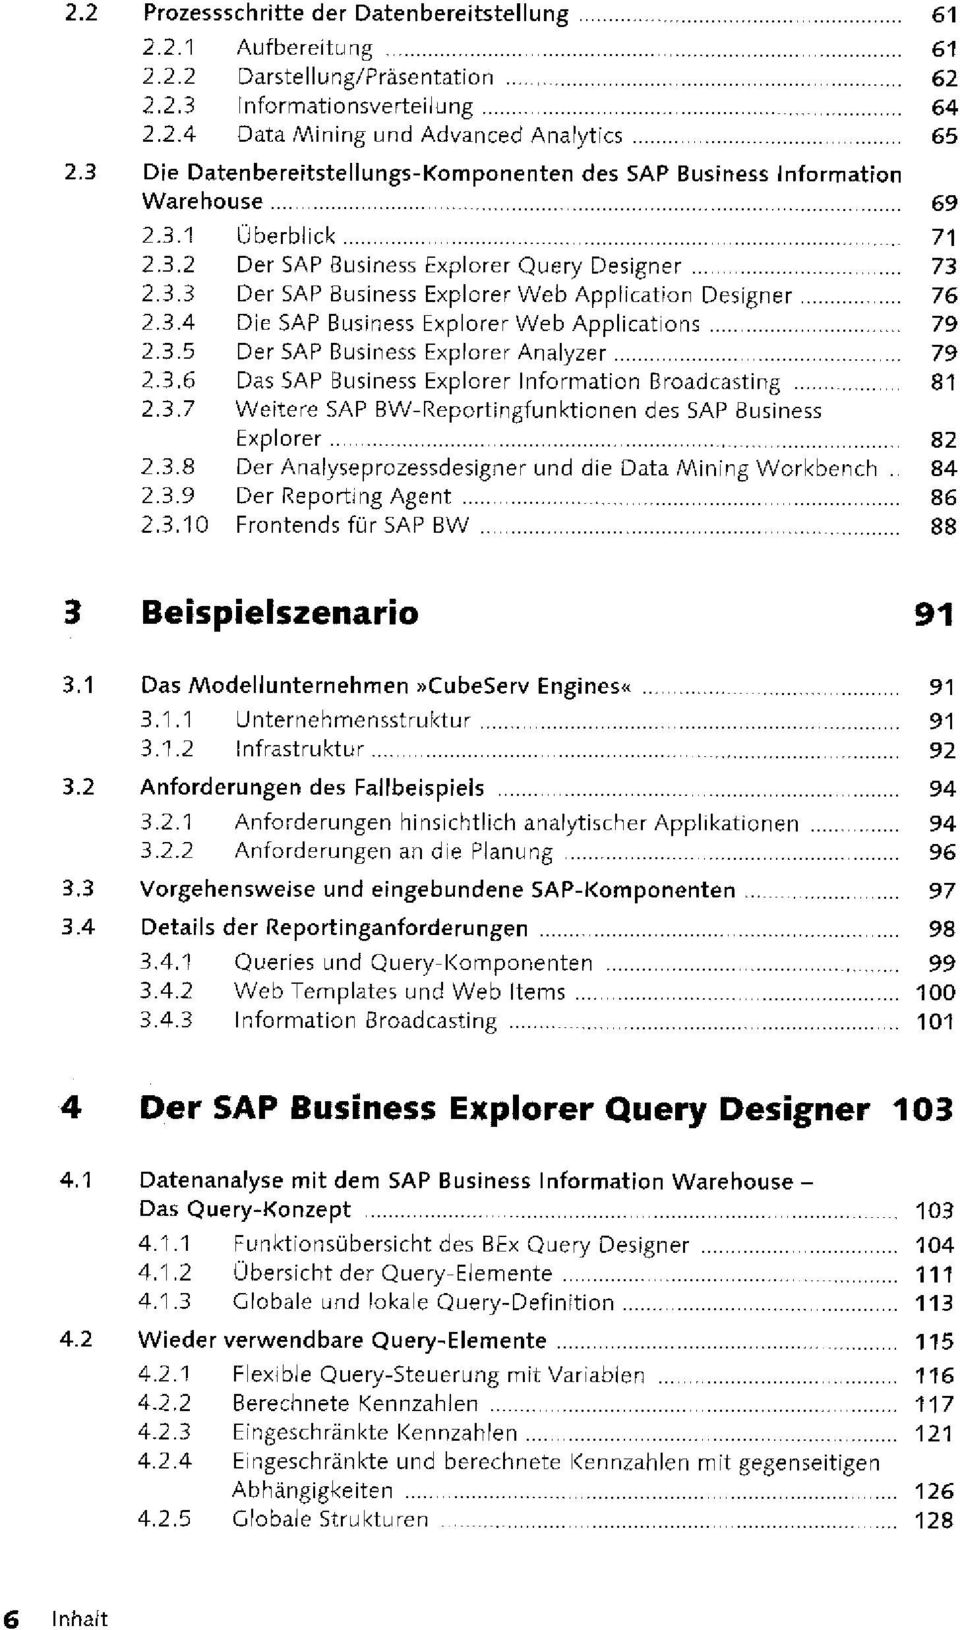 3.4 Die SAP Business Explorer Web Applications 79 2.3.5 Der SAP Business Explorer Analyzer 79 2.3.6 Das SAP Business Explorer Information Broadcasting 81 2.3.7 Weitere SAP BW-Reportingfunktionen des SAP Business Explorer 82 2.